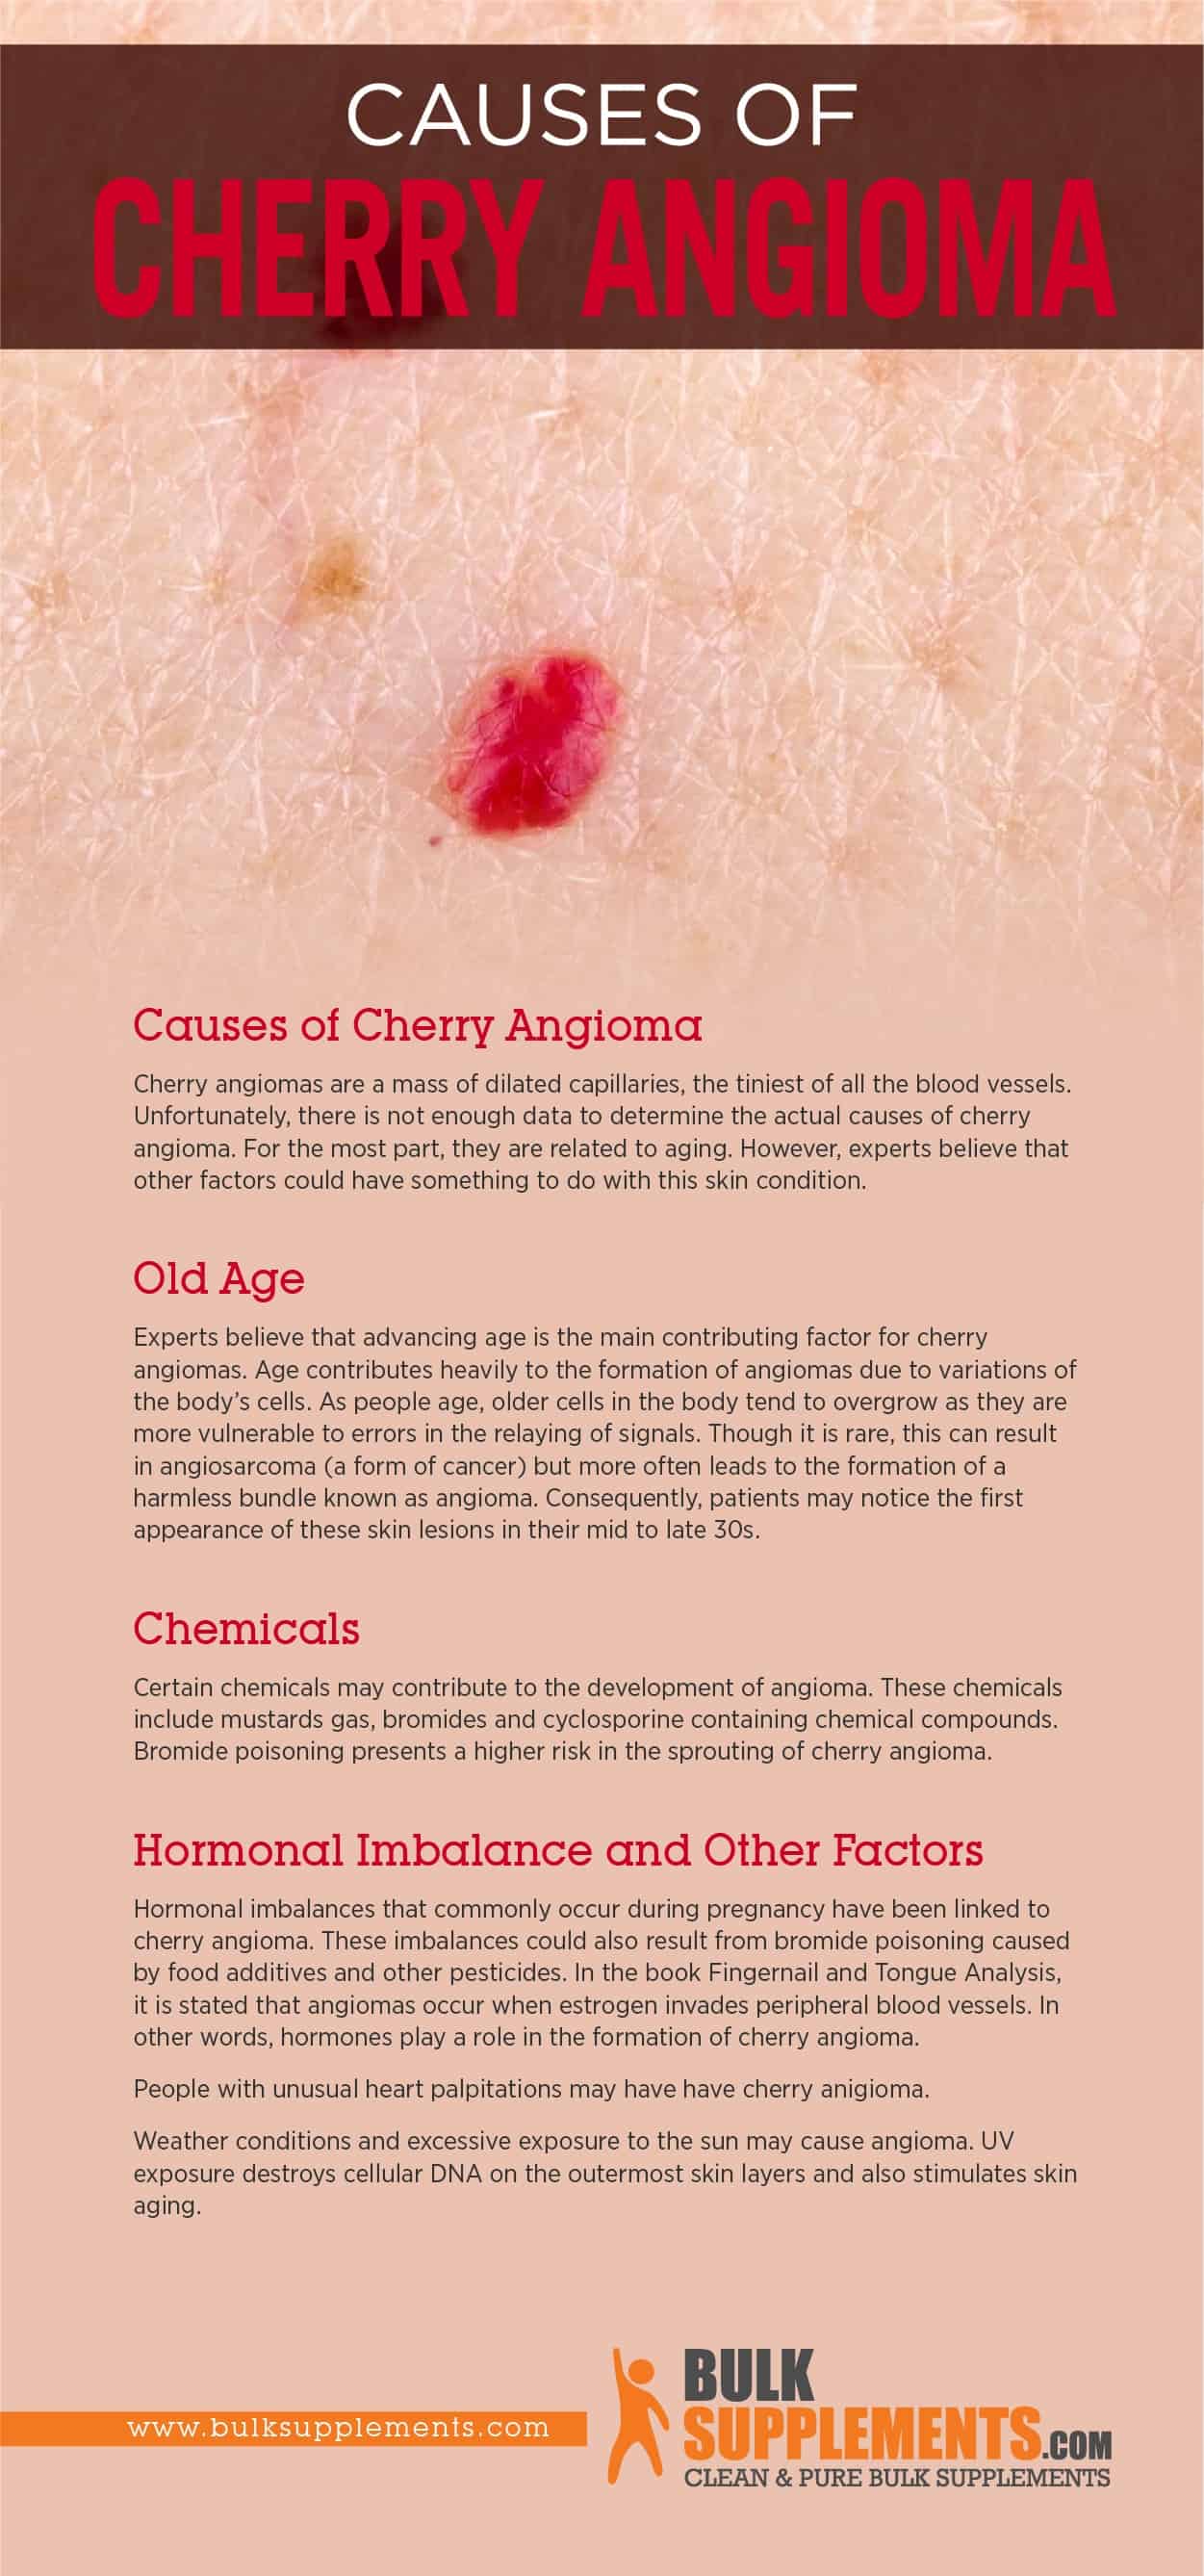 Causes of Cherry Angioma